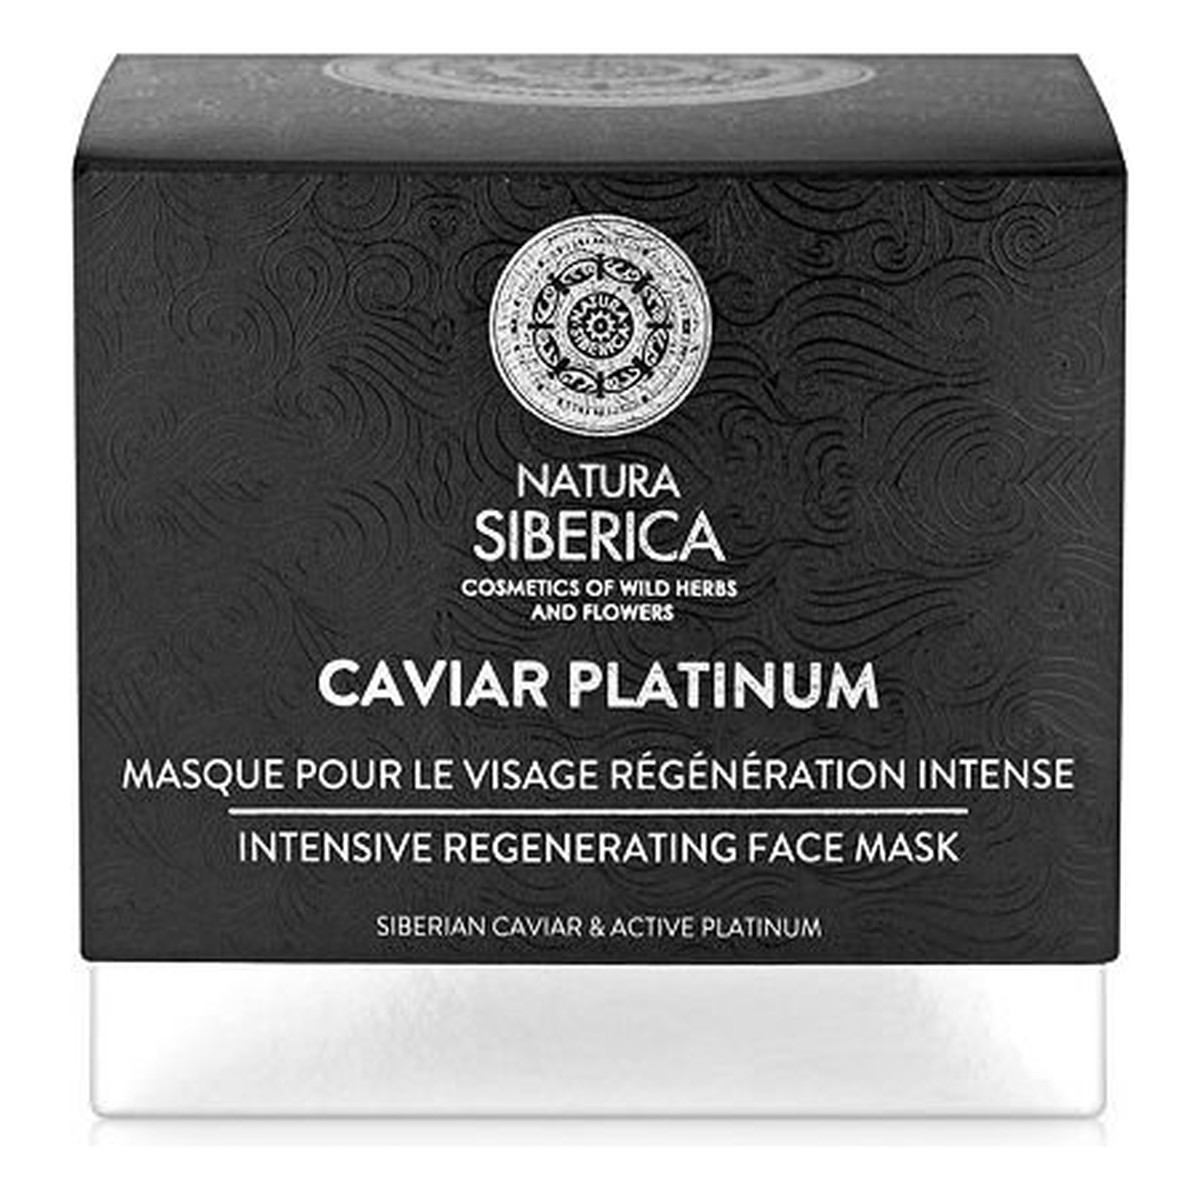 Natura Siberica Caviar Platinum Intensive Regenerating Face Mask Intensywnie regeneryjąca maska do twarzy 50ml